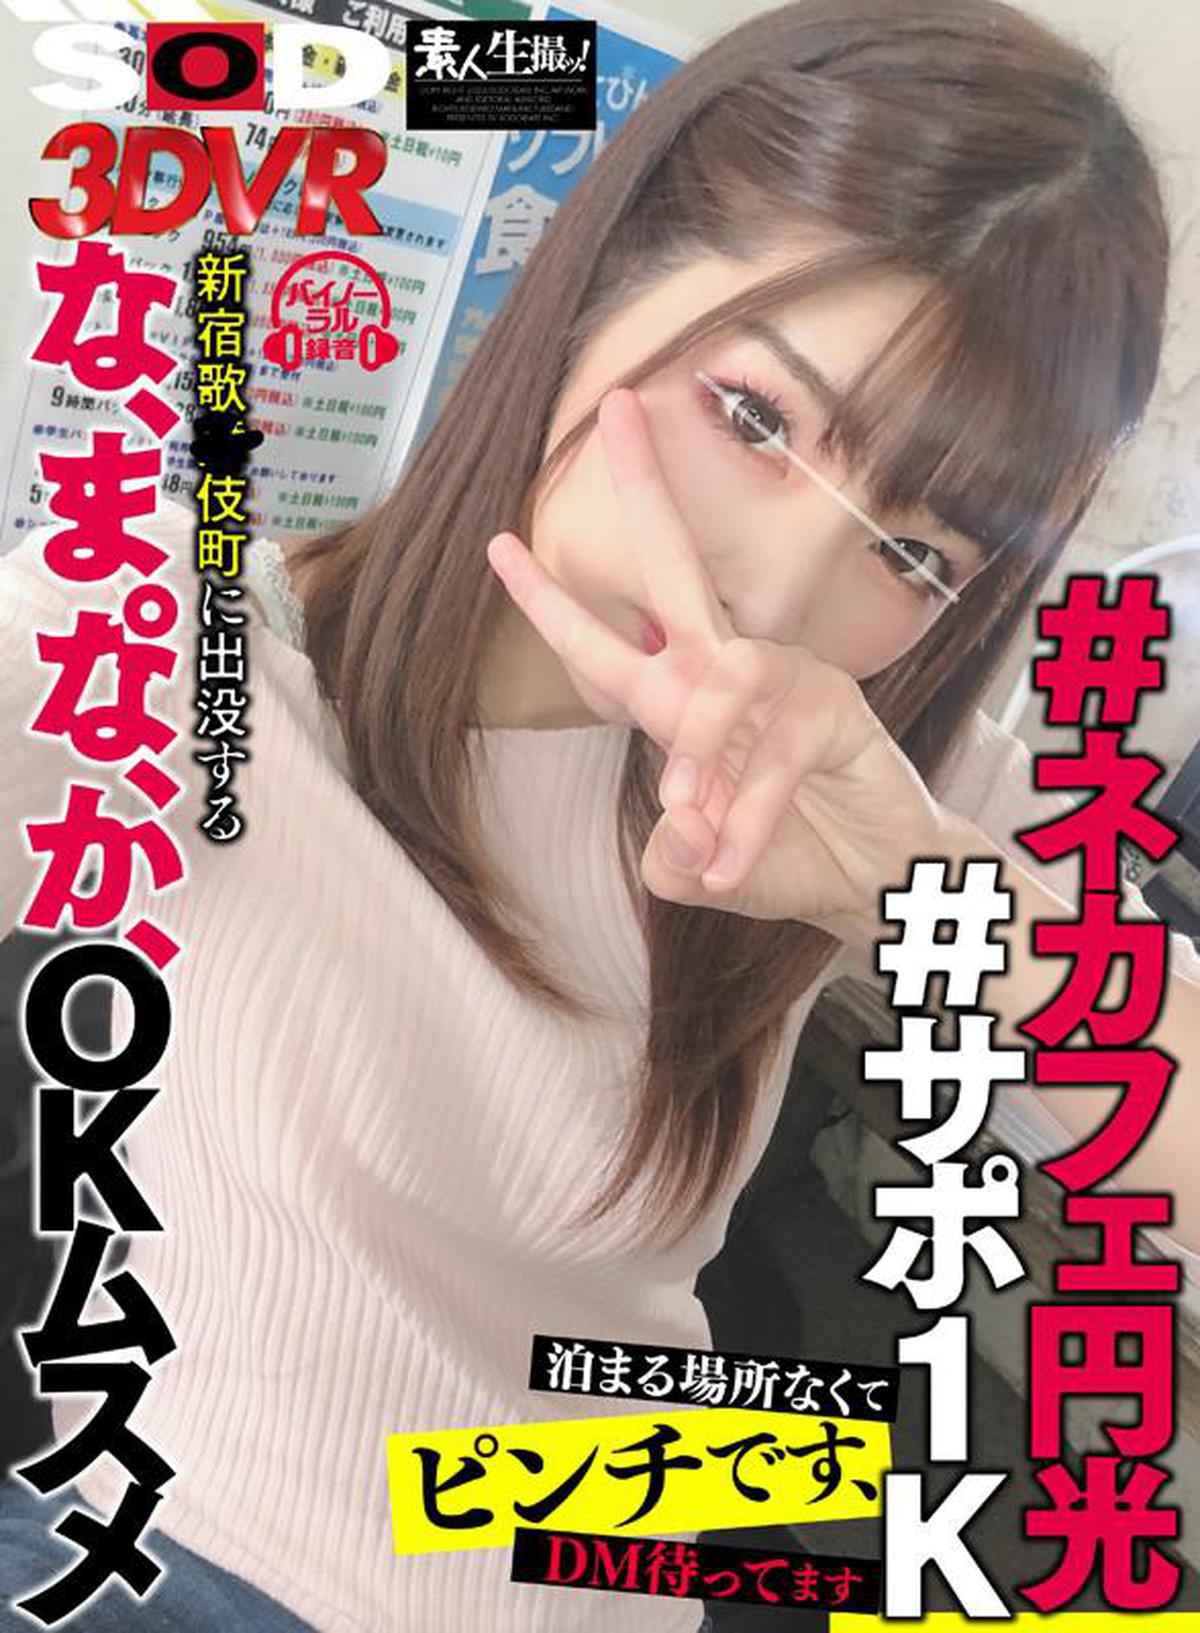 (VR) 3DSVR-0656 # Necafe Enko # Support 1K أنا في مأزق لأنه ليس لدي مكان للإقامة ، أنا في انتظار DM Shinjuku Kabuki ○ لا تظهر في كابوكيتشو. هممم ، موافق Musume